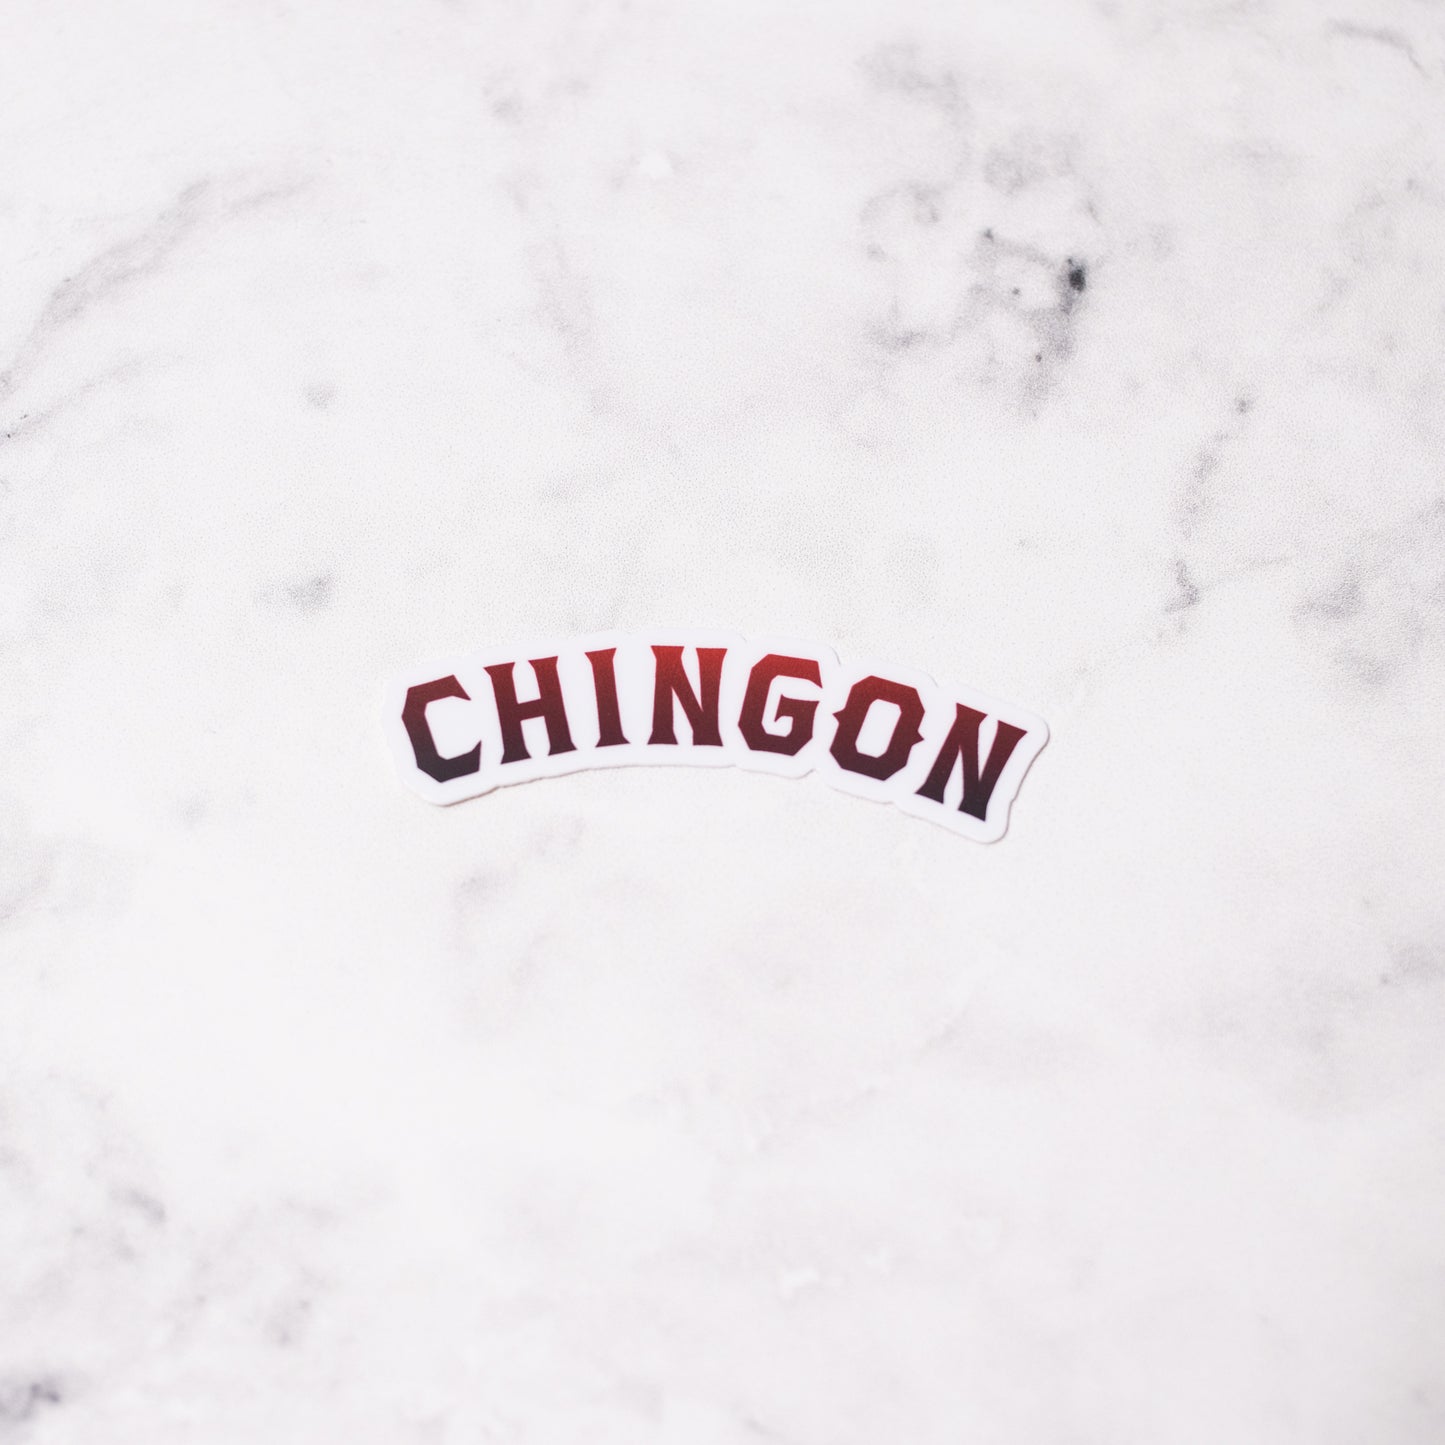 Chingon Sticker